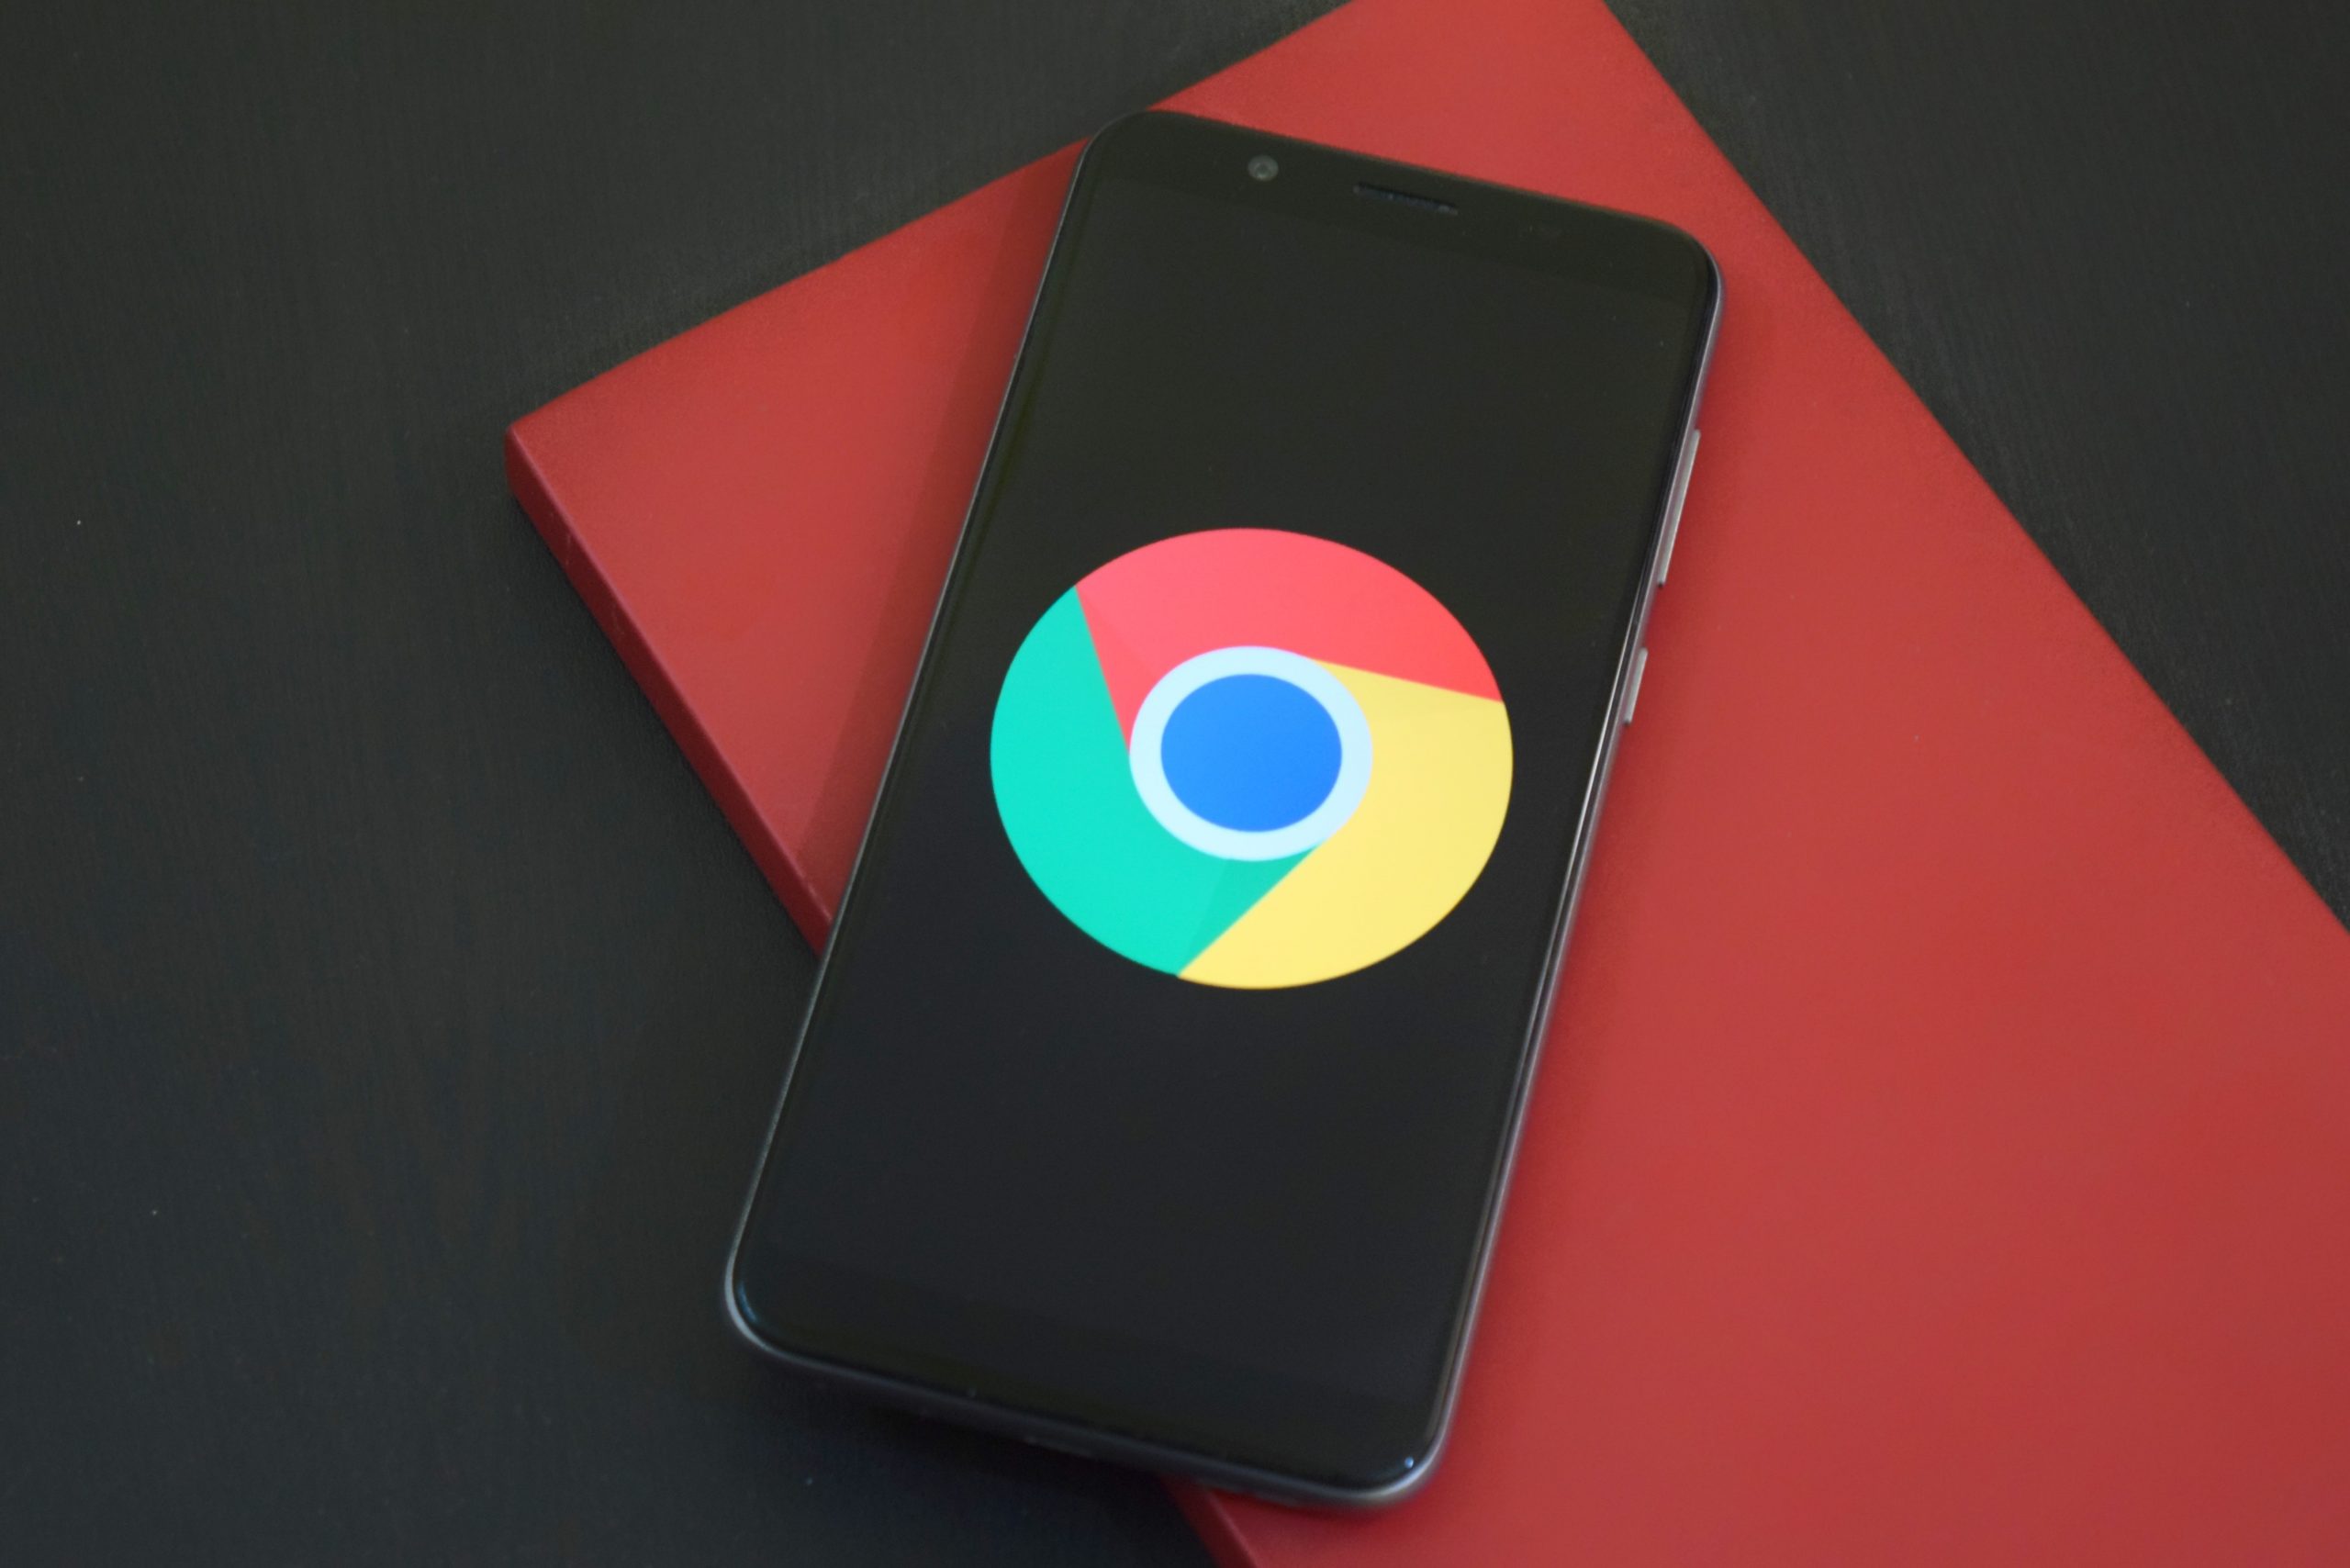 Google Chrome logo displayed on a phone phone screen